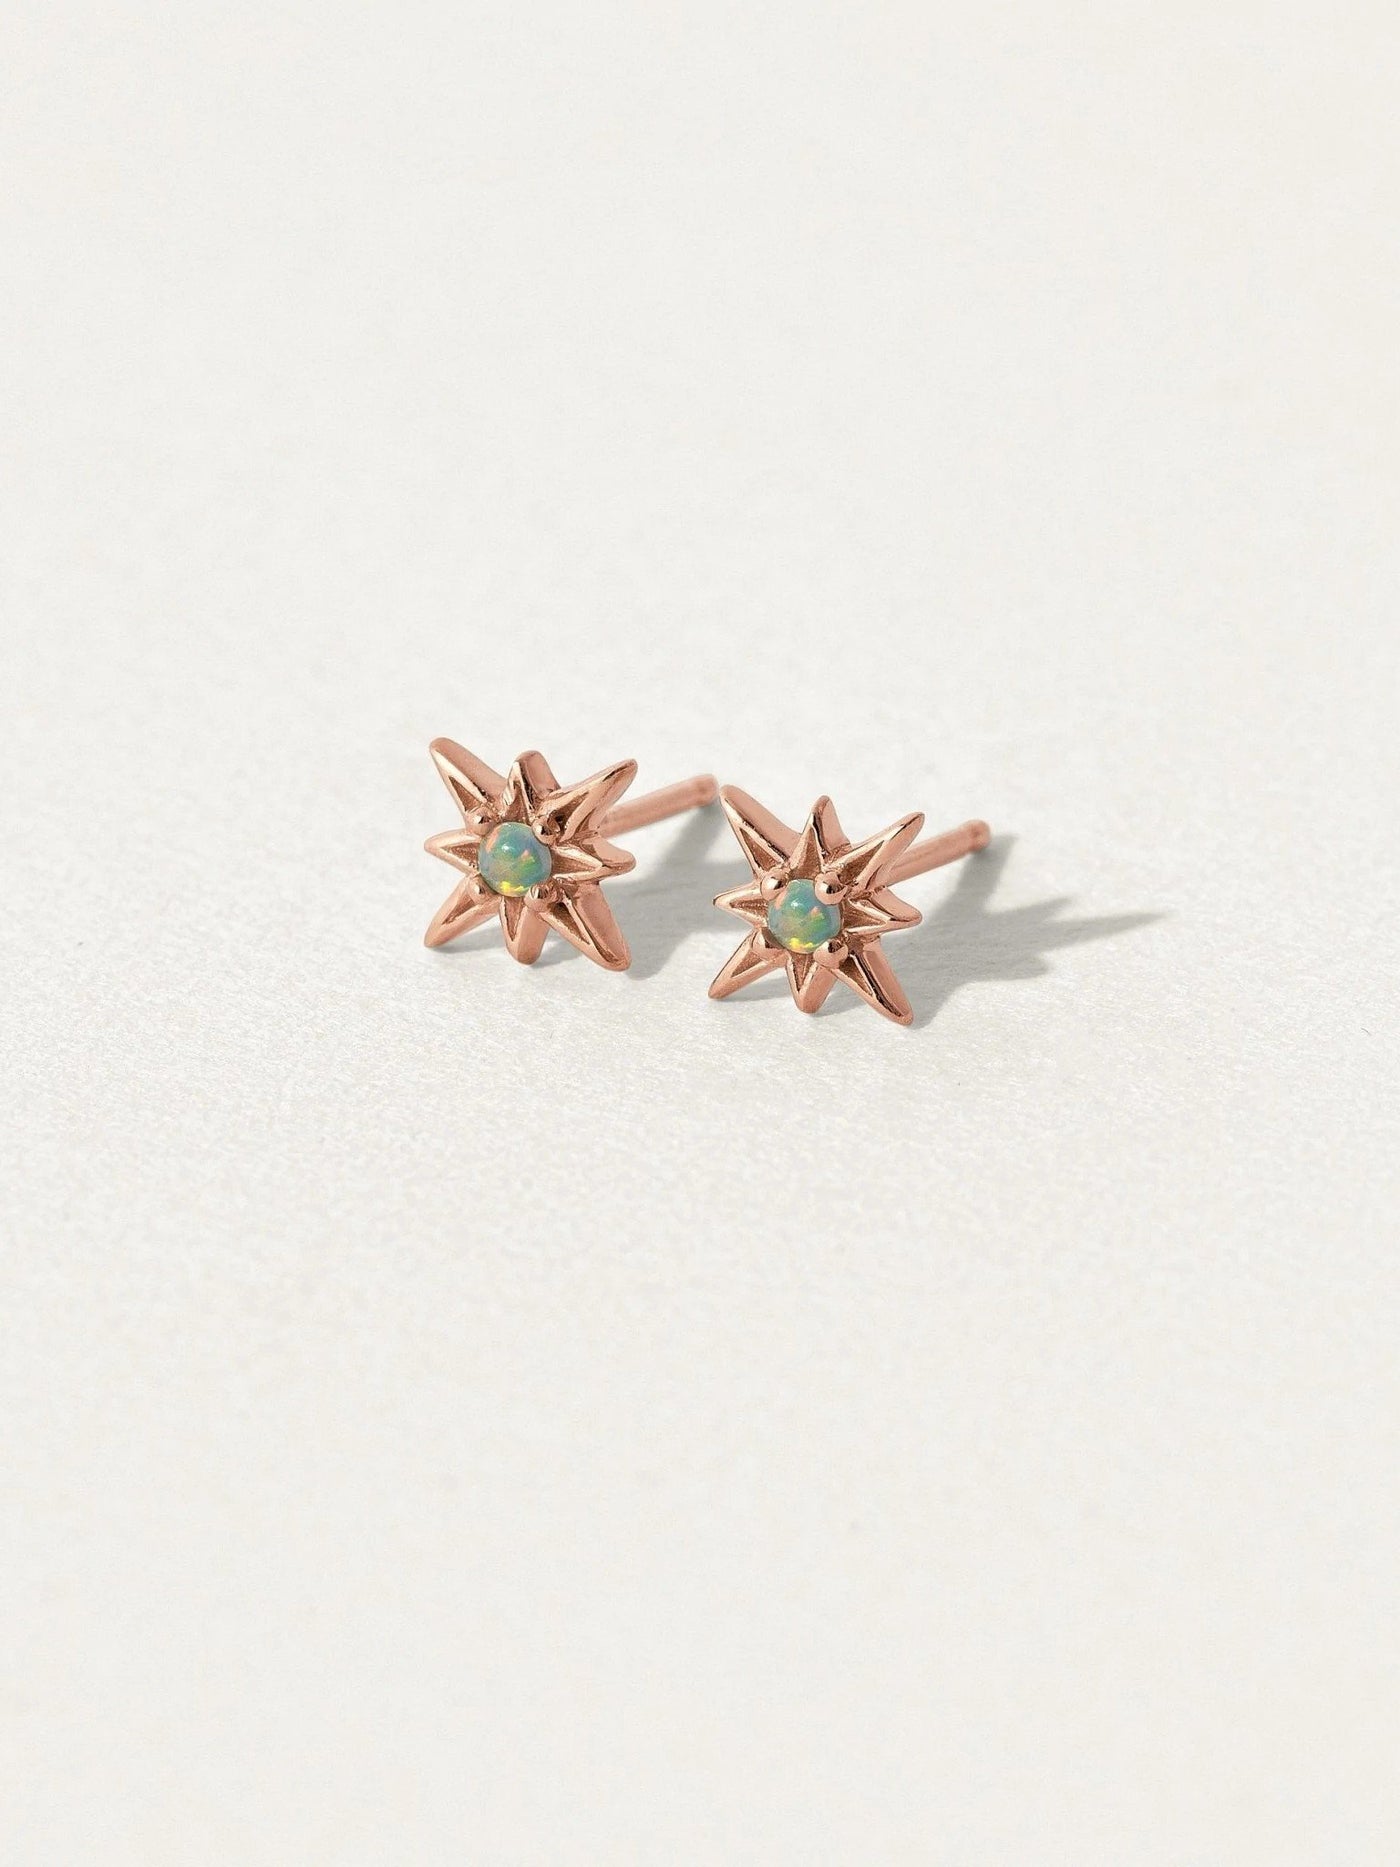 Olympia Sterling Silver Starburst Stud Earrings Set - 18K Rose Gold PlatedAnniversary GiftBackUpItemsLunai Jewelry